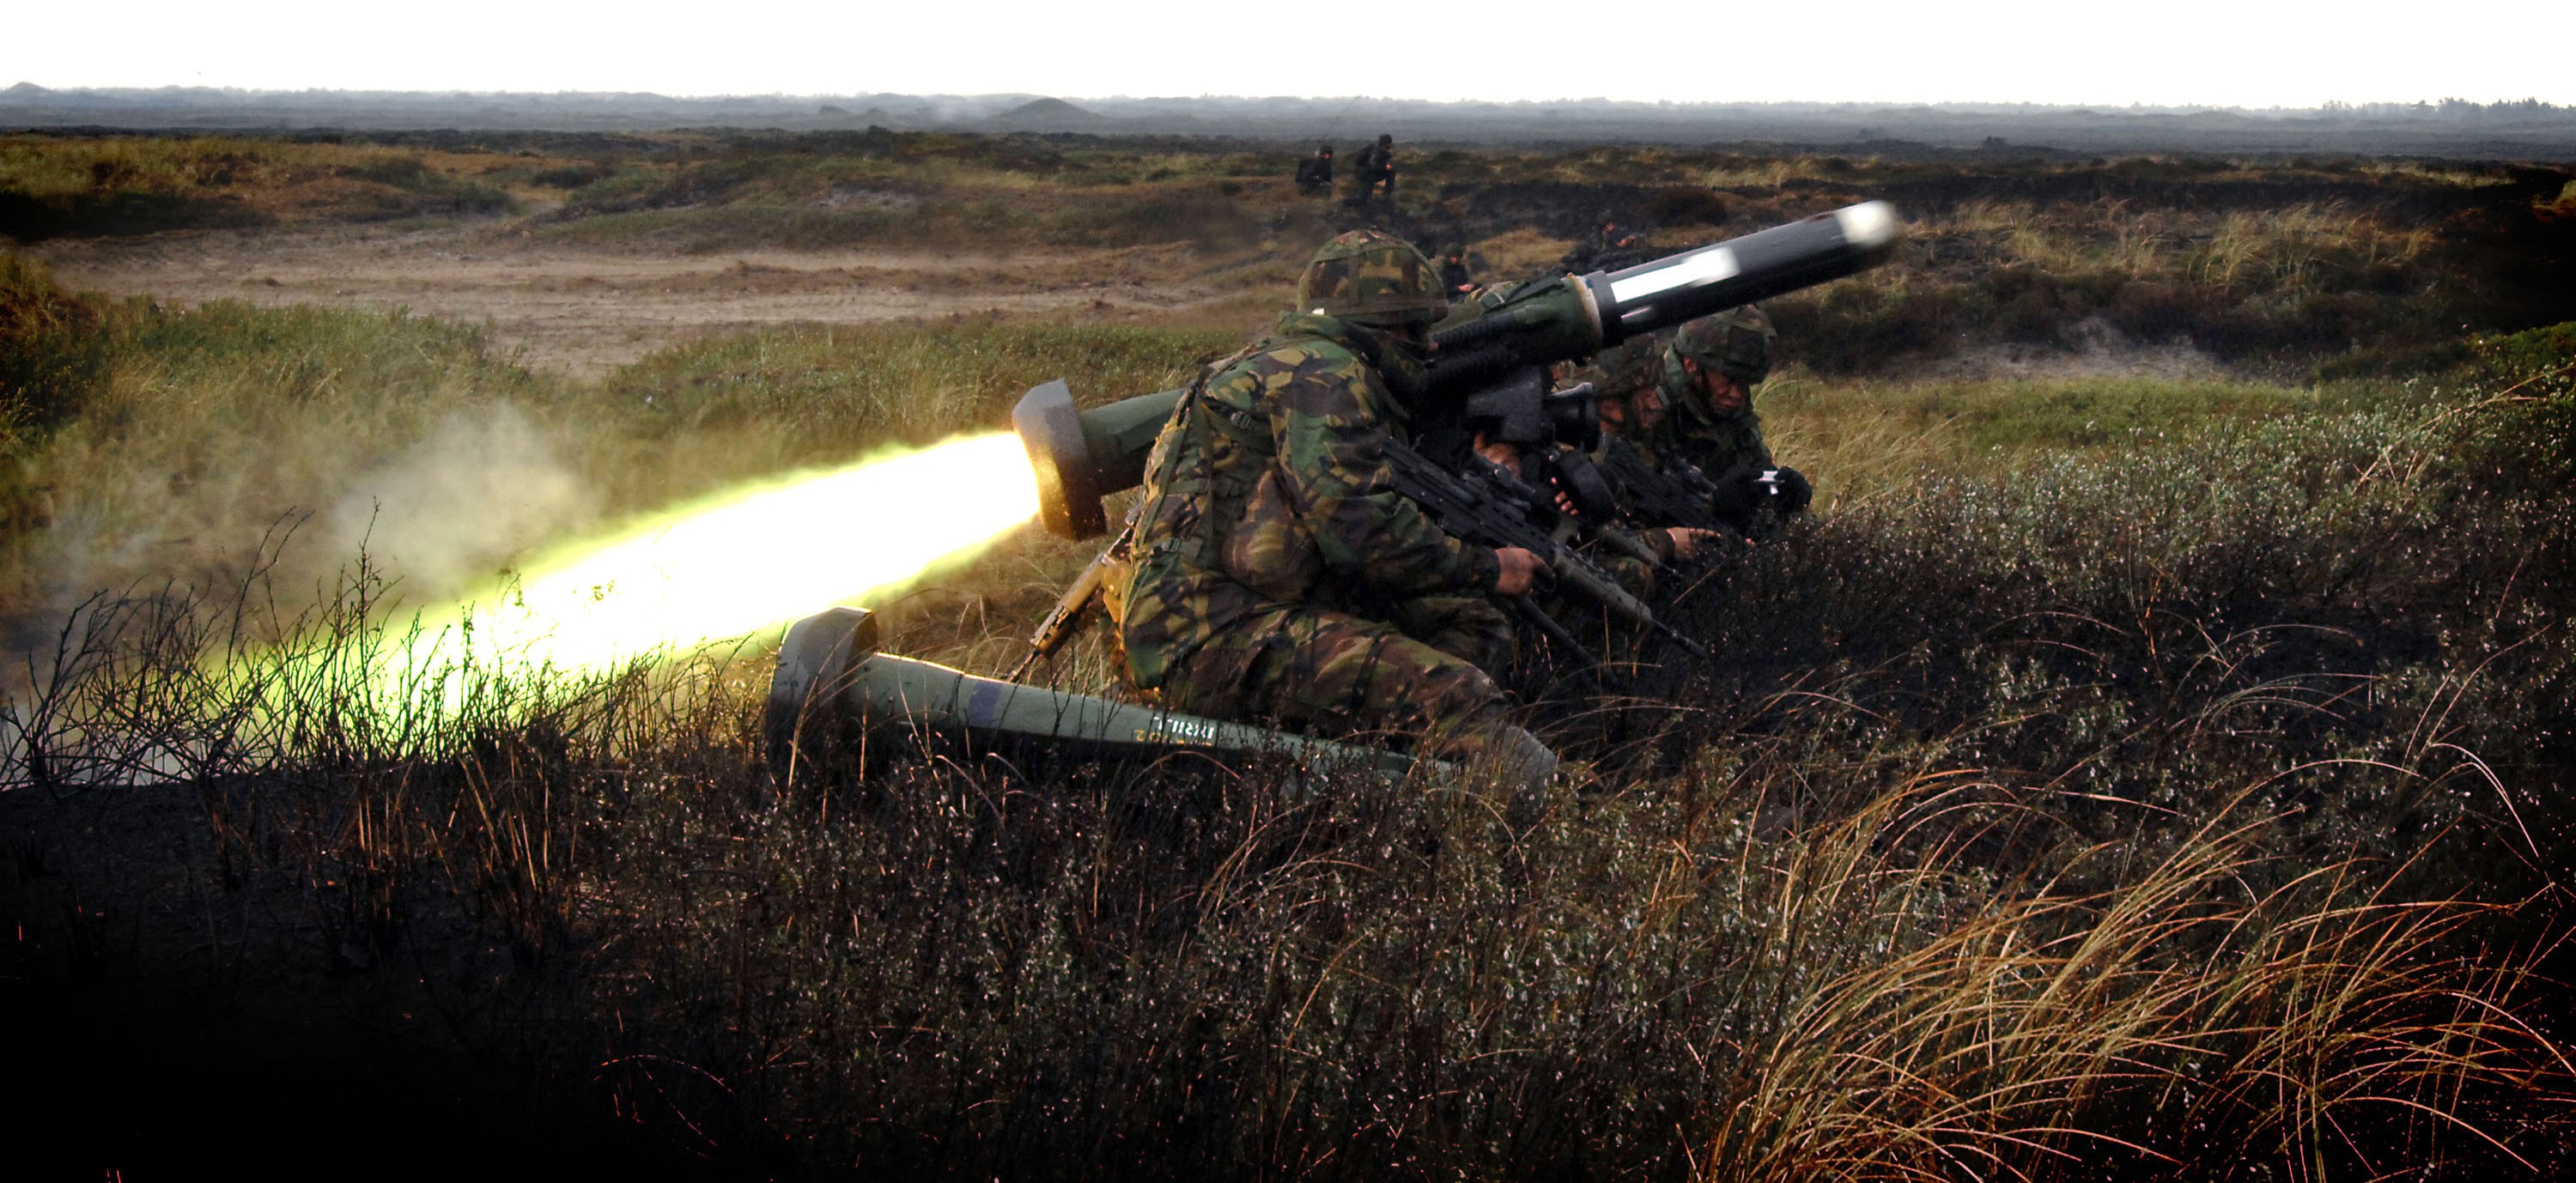 General 3000x1378 soldier military camouflage shooting men rocket gun outdoors